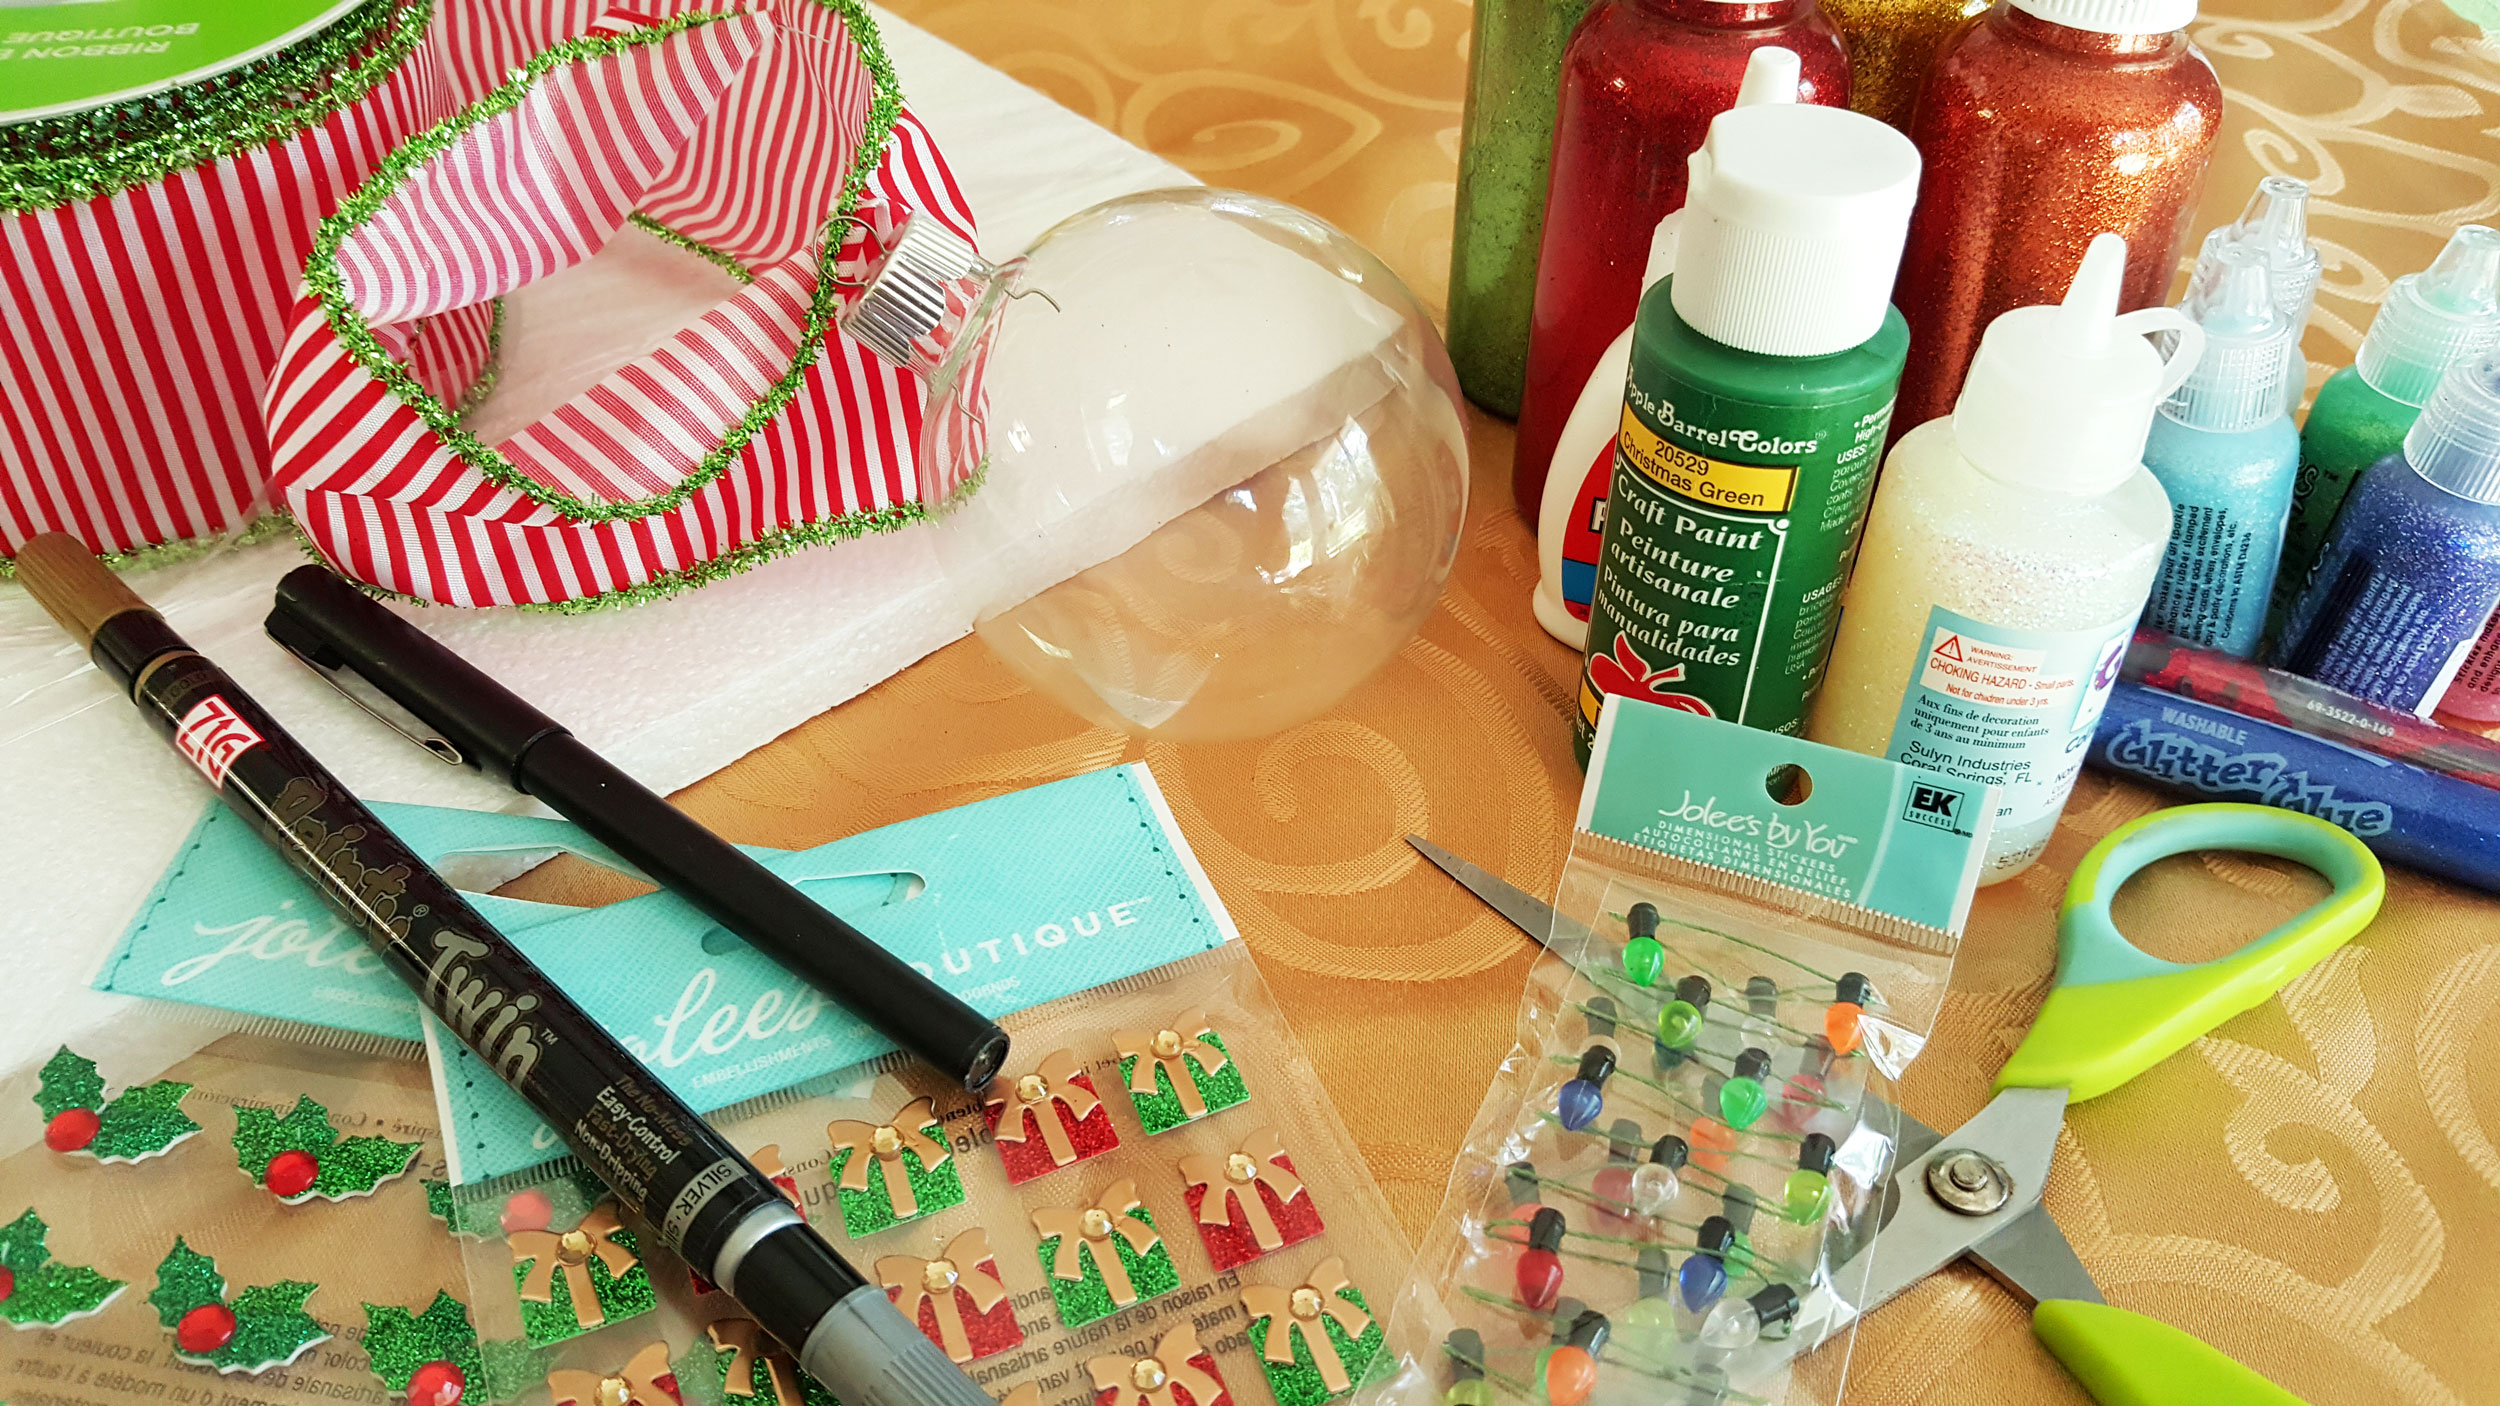 Christmas Tree ornament Supplies including glitter glue, paint, miniature lights, glue and stickers. | OrnamentShop.com